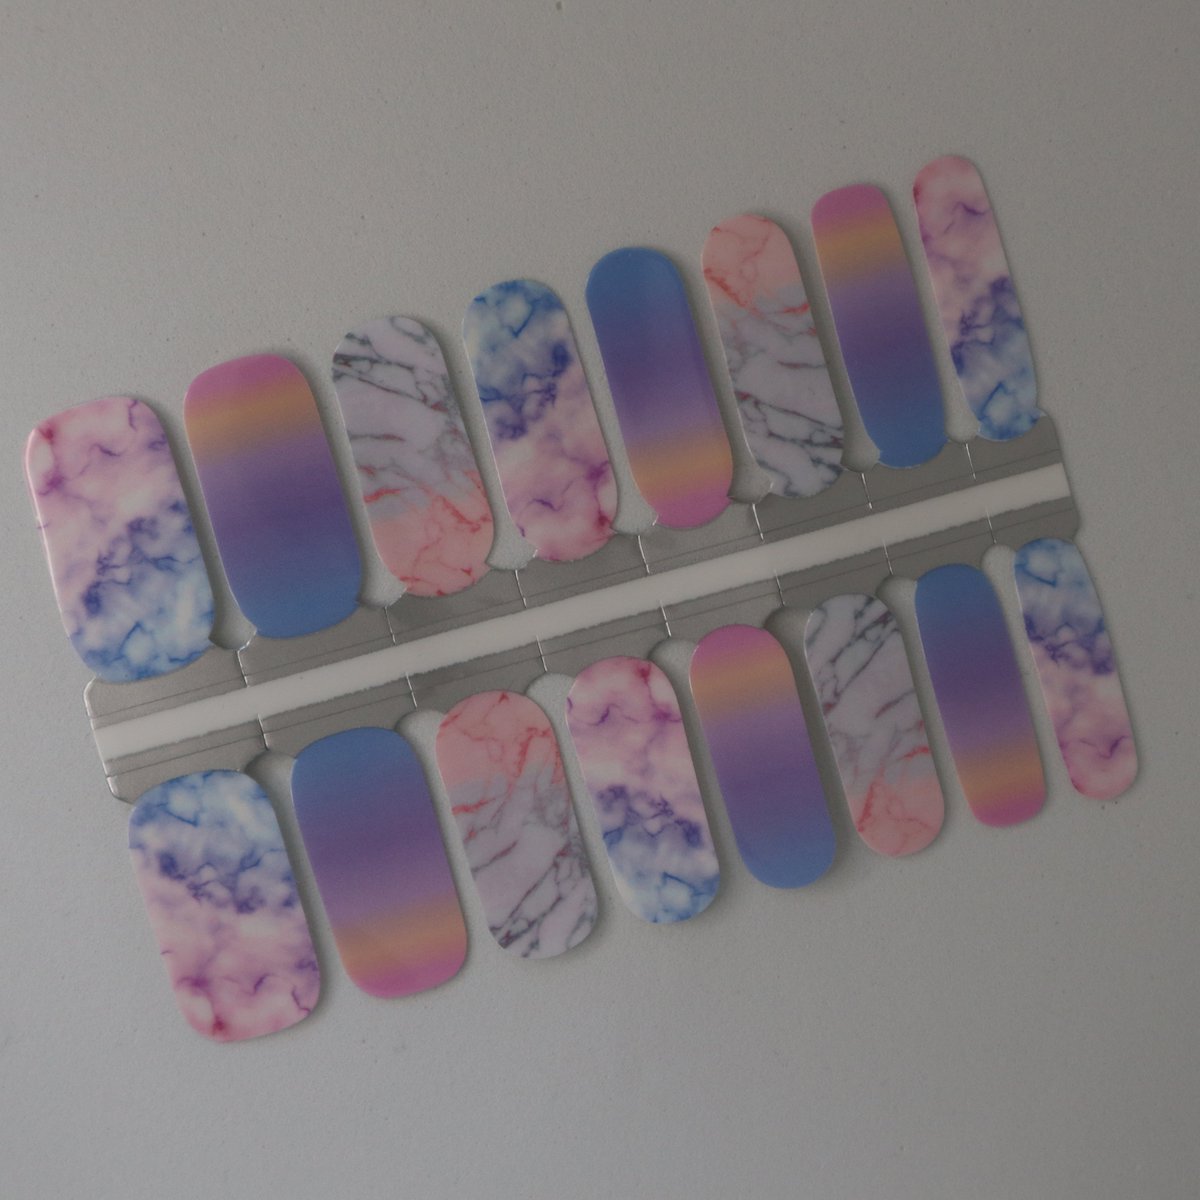 YellowSnails - Nagel Wraps - Marble rainbow - Nagel Stickers - Nagel Folie - Nail Wraps - Nail Stickers - Nail Art - Nail Foil